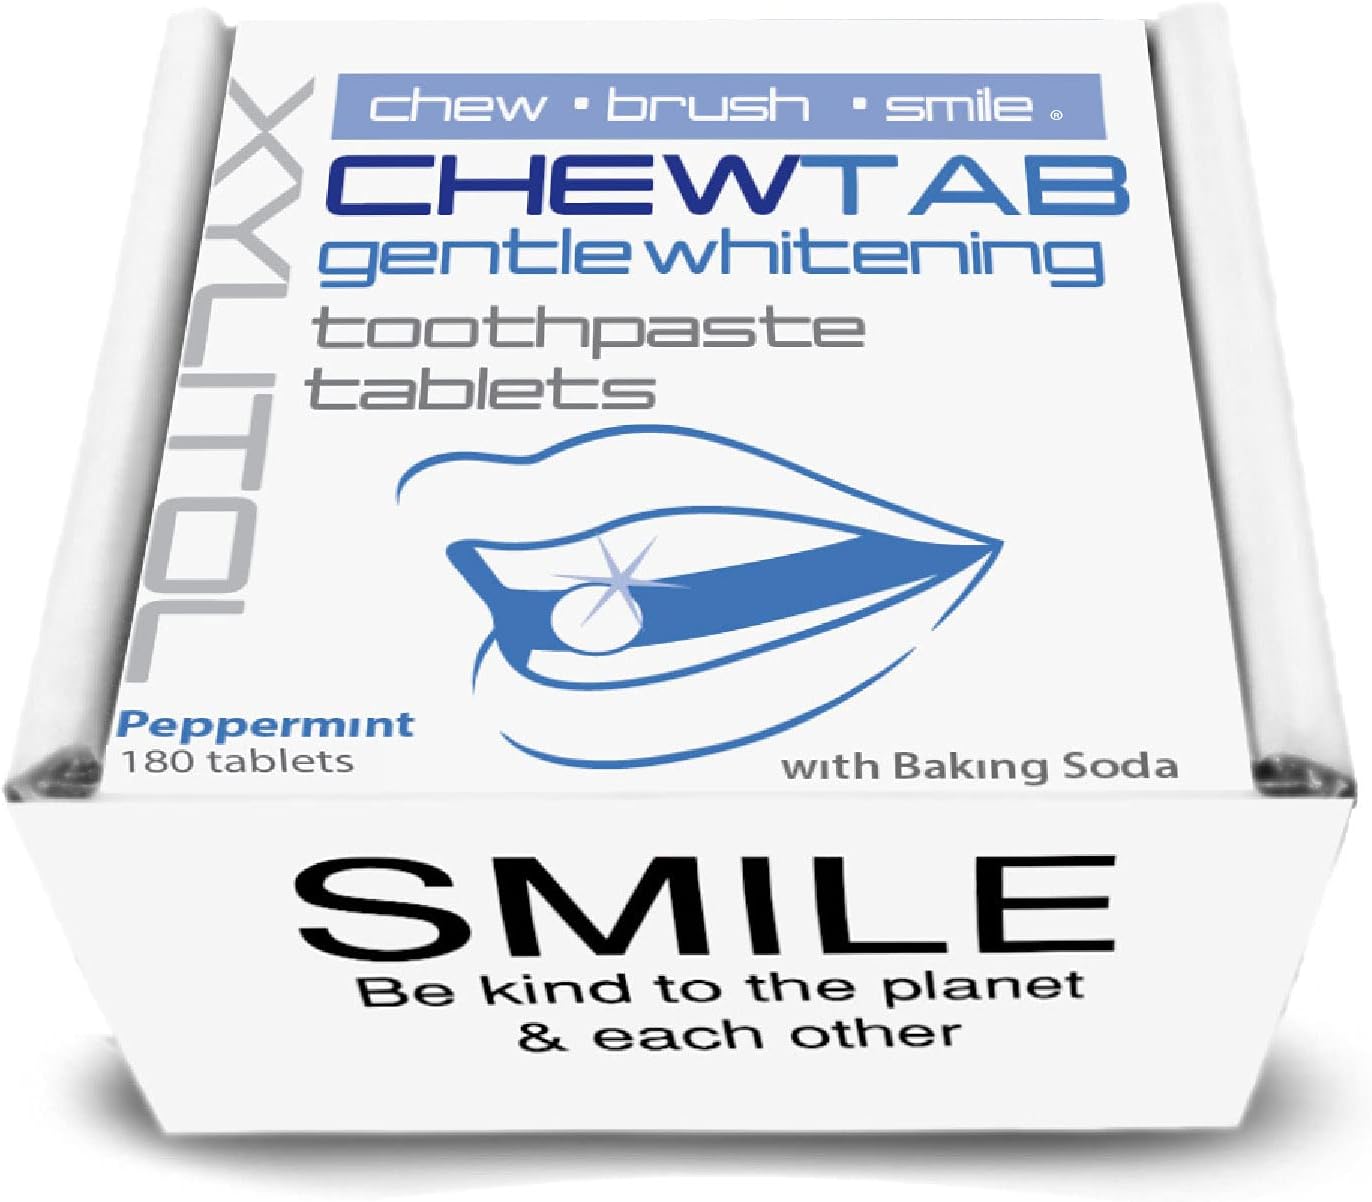 Weldental Chewtab Gentle Whitening Toothpaste Tablets Refill